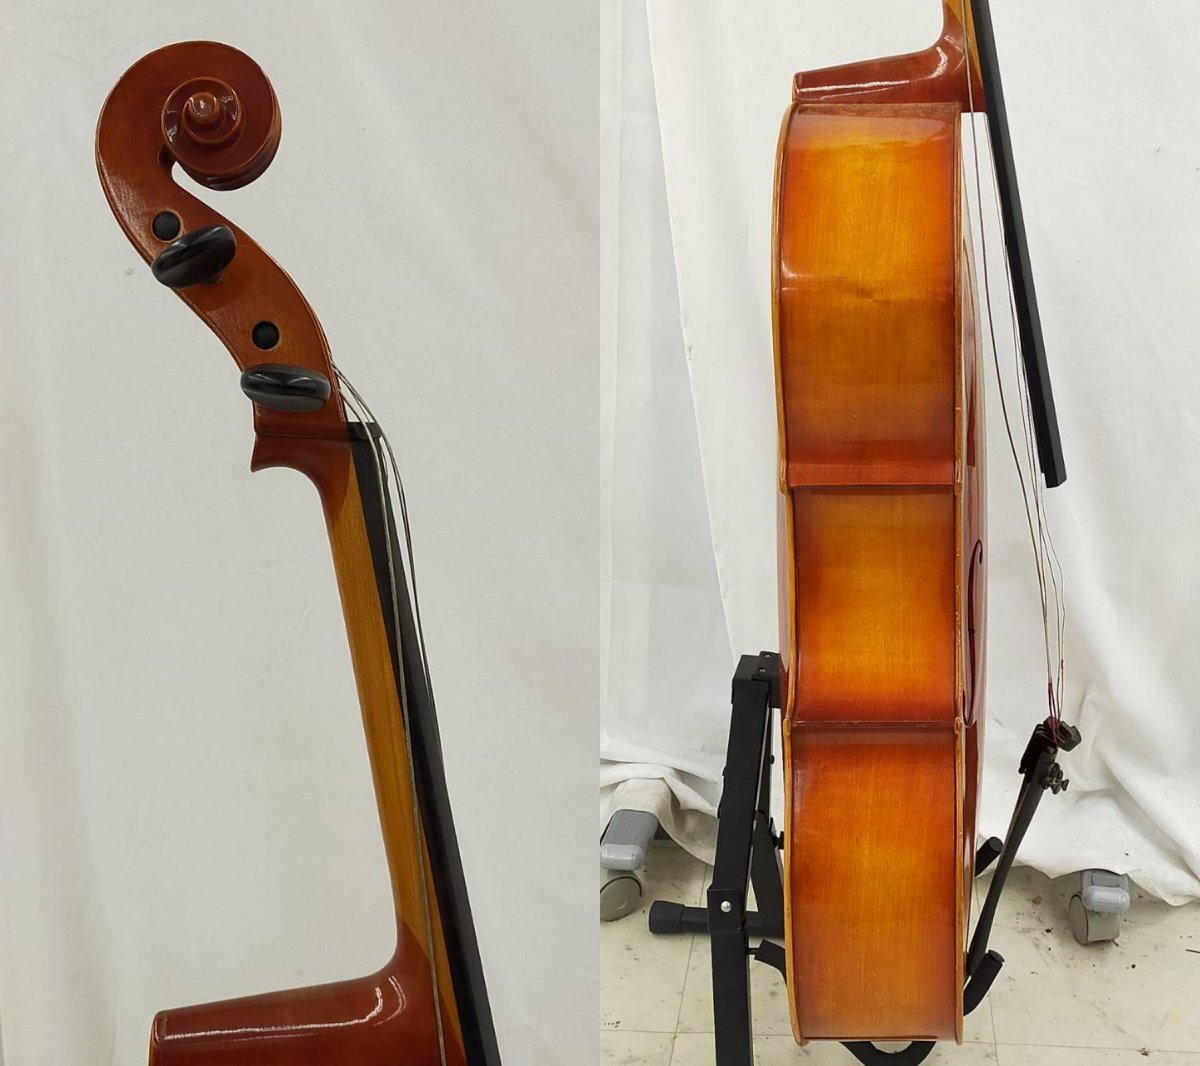 T7609*[ б/у ][ Kagawa префектура прямой самовывоз ]SUZUKI Suzuki No.74 4/4 виолончель мягкий чехол есть 